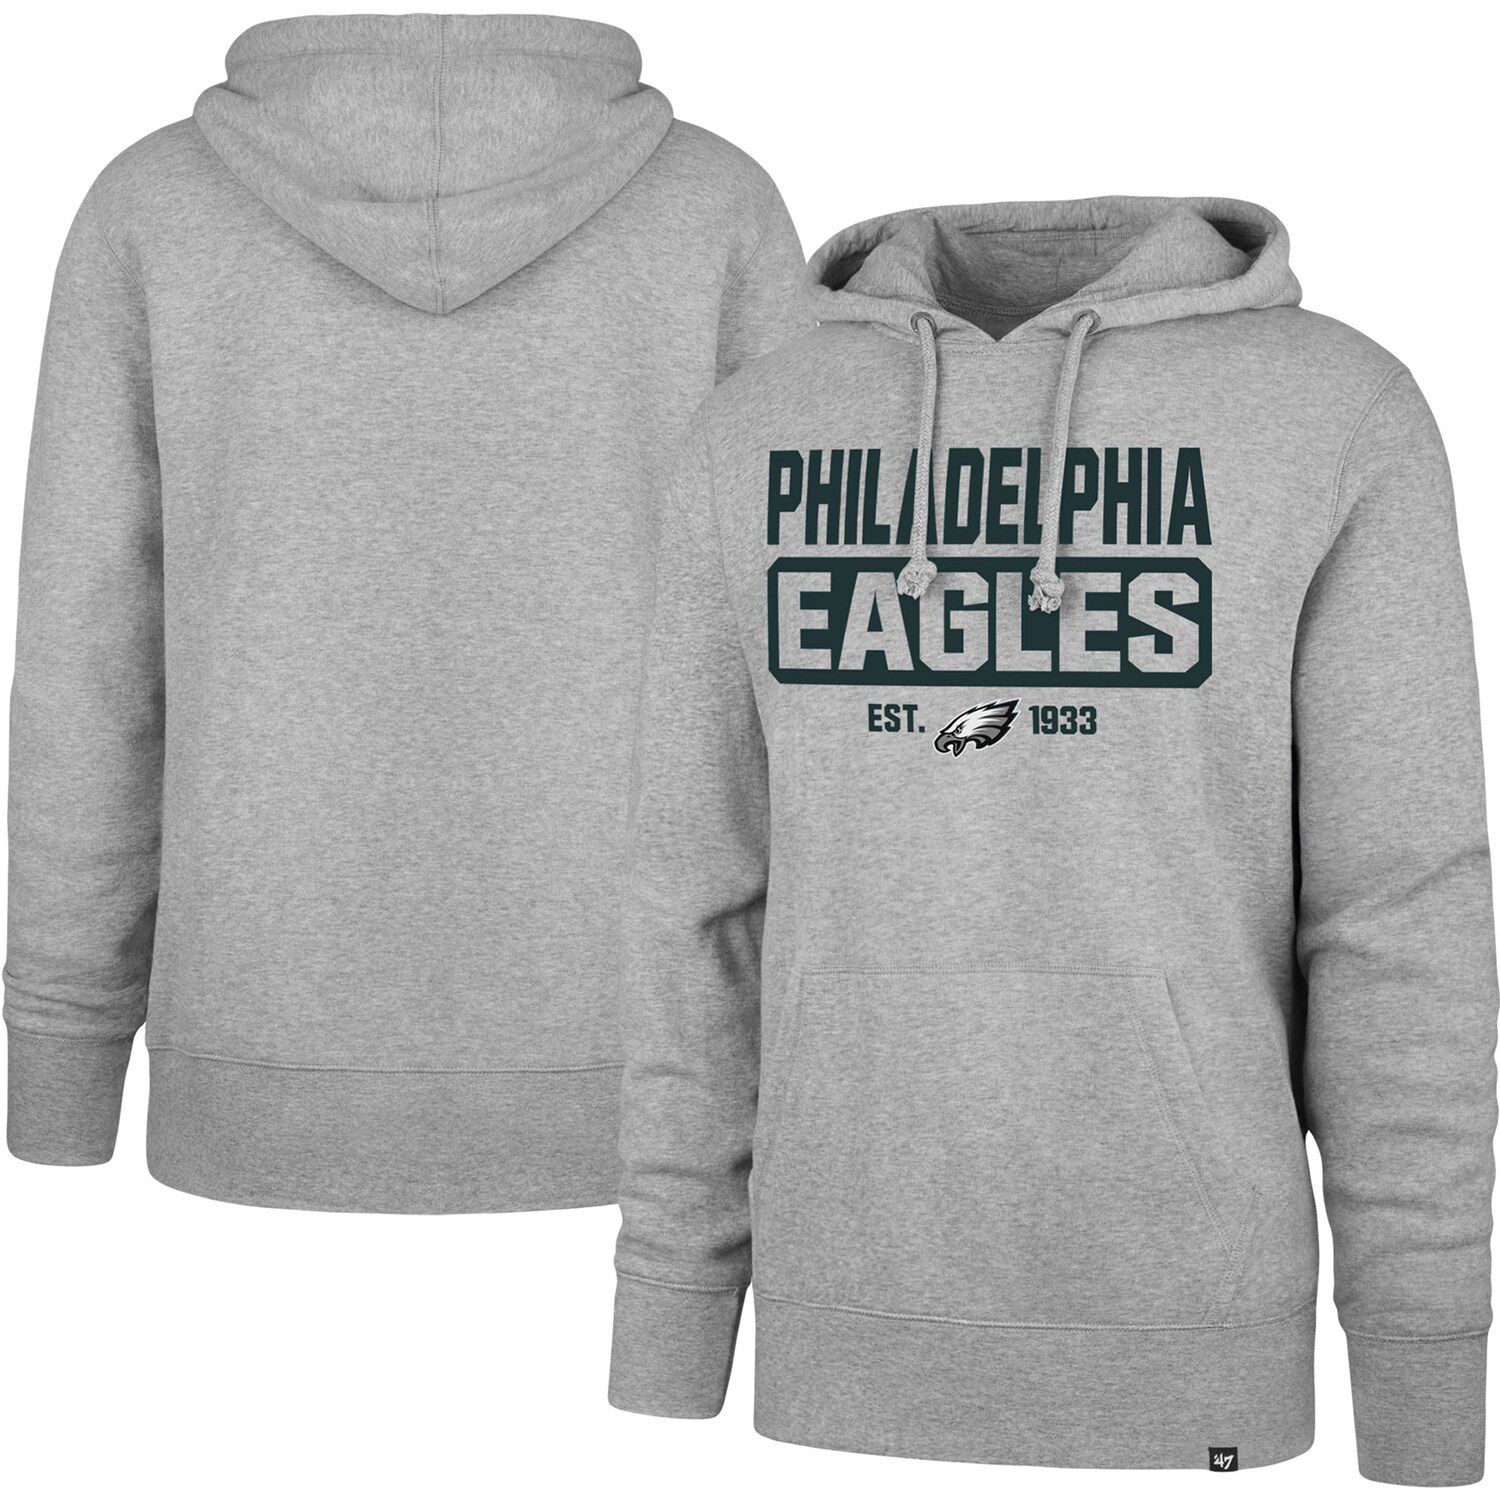 Men's Starter Heather Gray Philadelphia Eagles Retro Pullover Hoodie Size: Medium